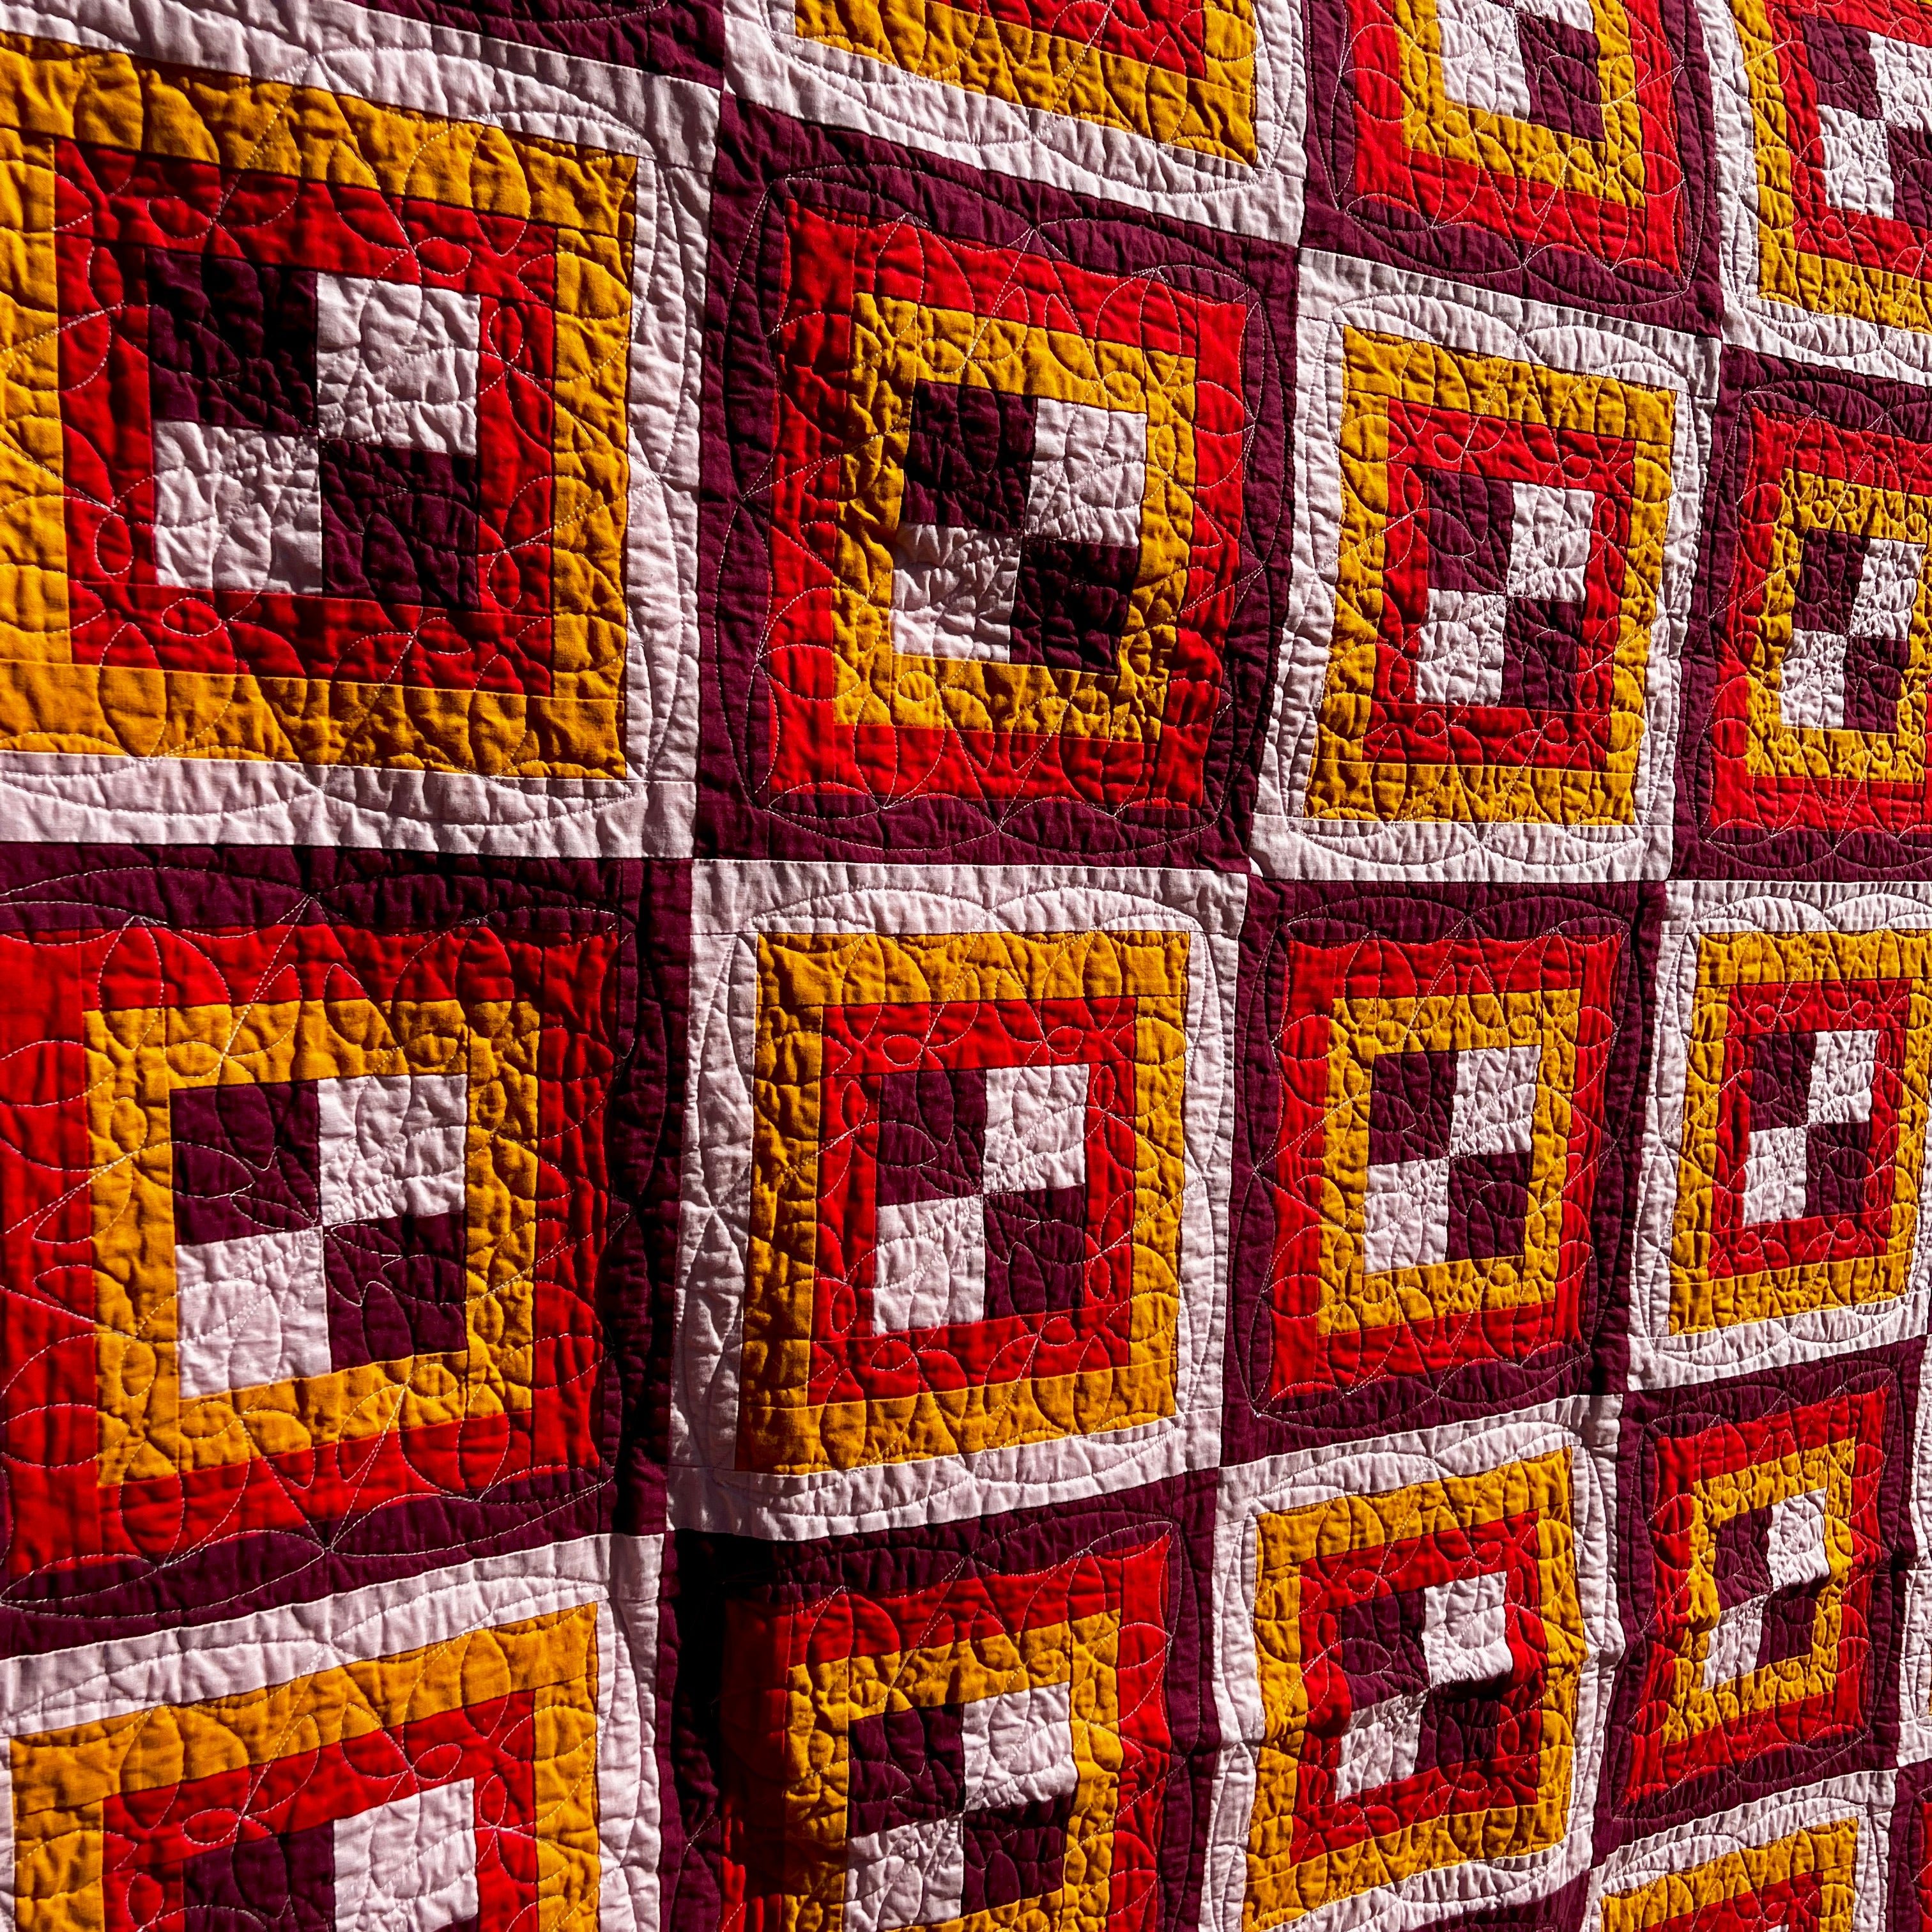 rec room - block pattern handmade quilt - red, pink, white, orange - closeup